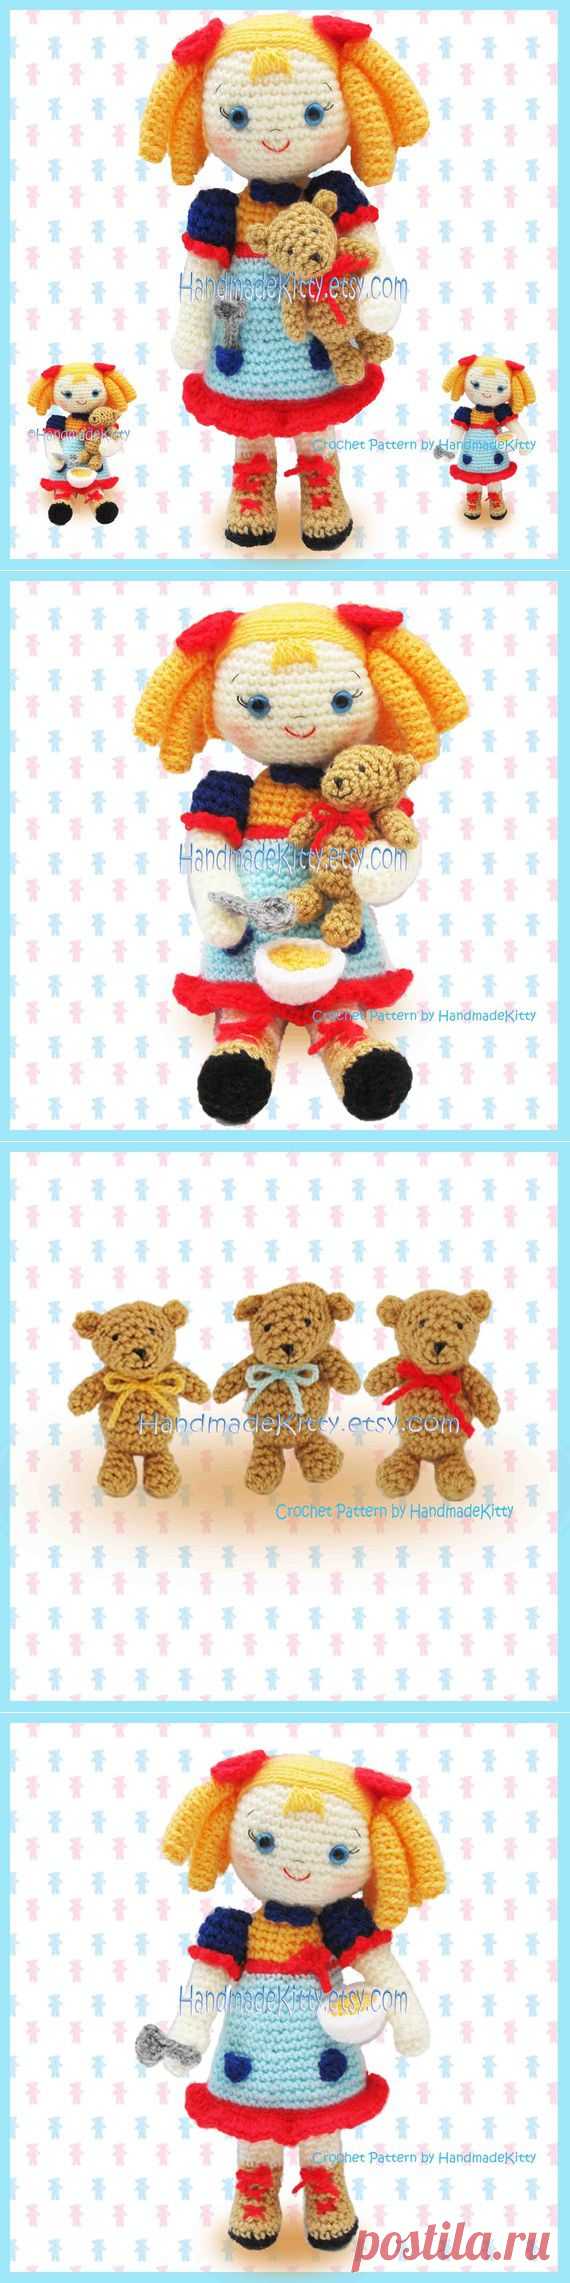 Златовласка и три маленьких медведей Амигуруми по handmadekitty